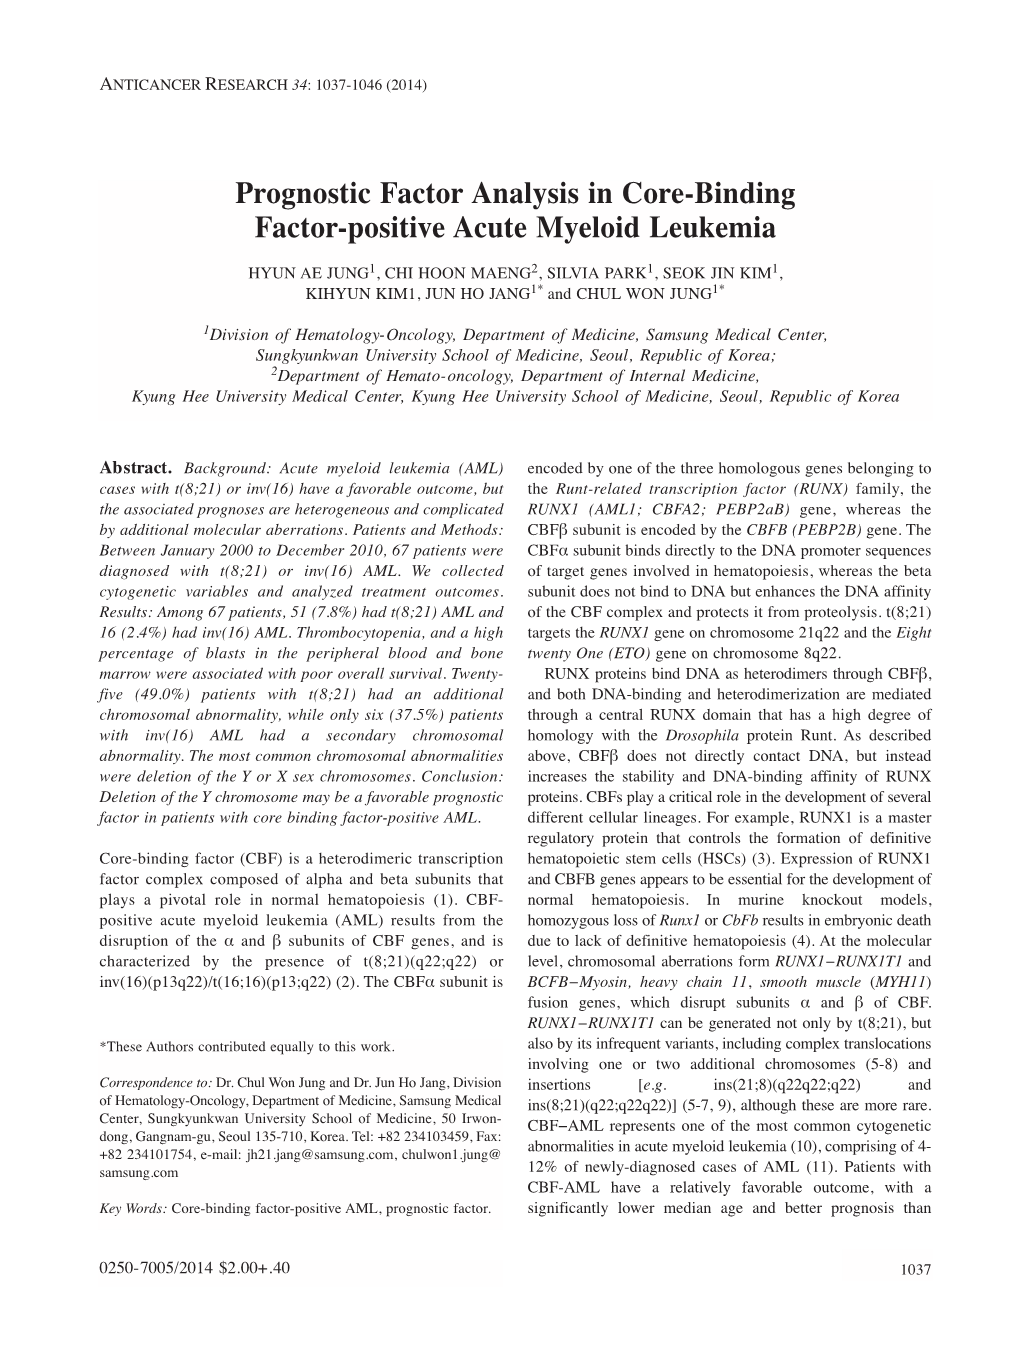 Prognostic Factor Analysis in Core-Binding Factor-Positive Acute Myeloid Leukemia